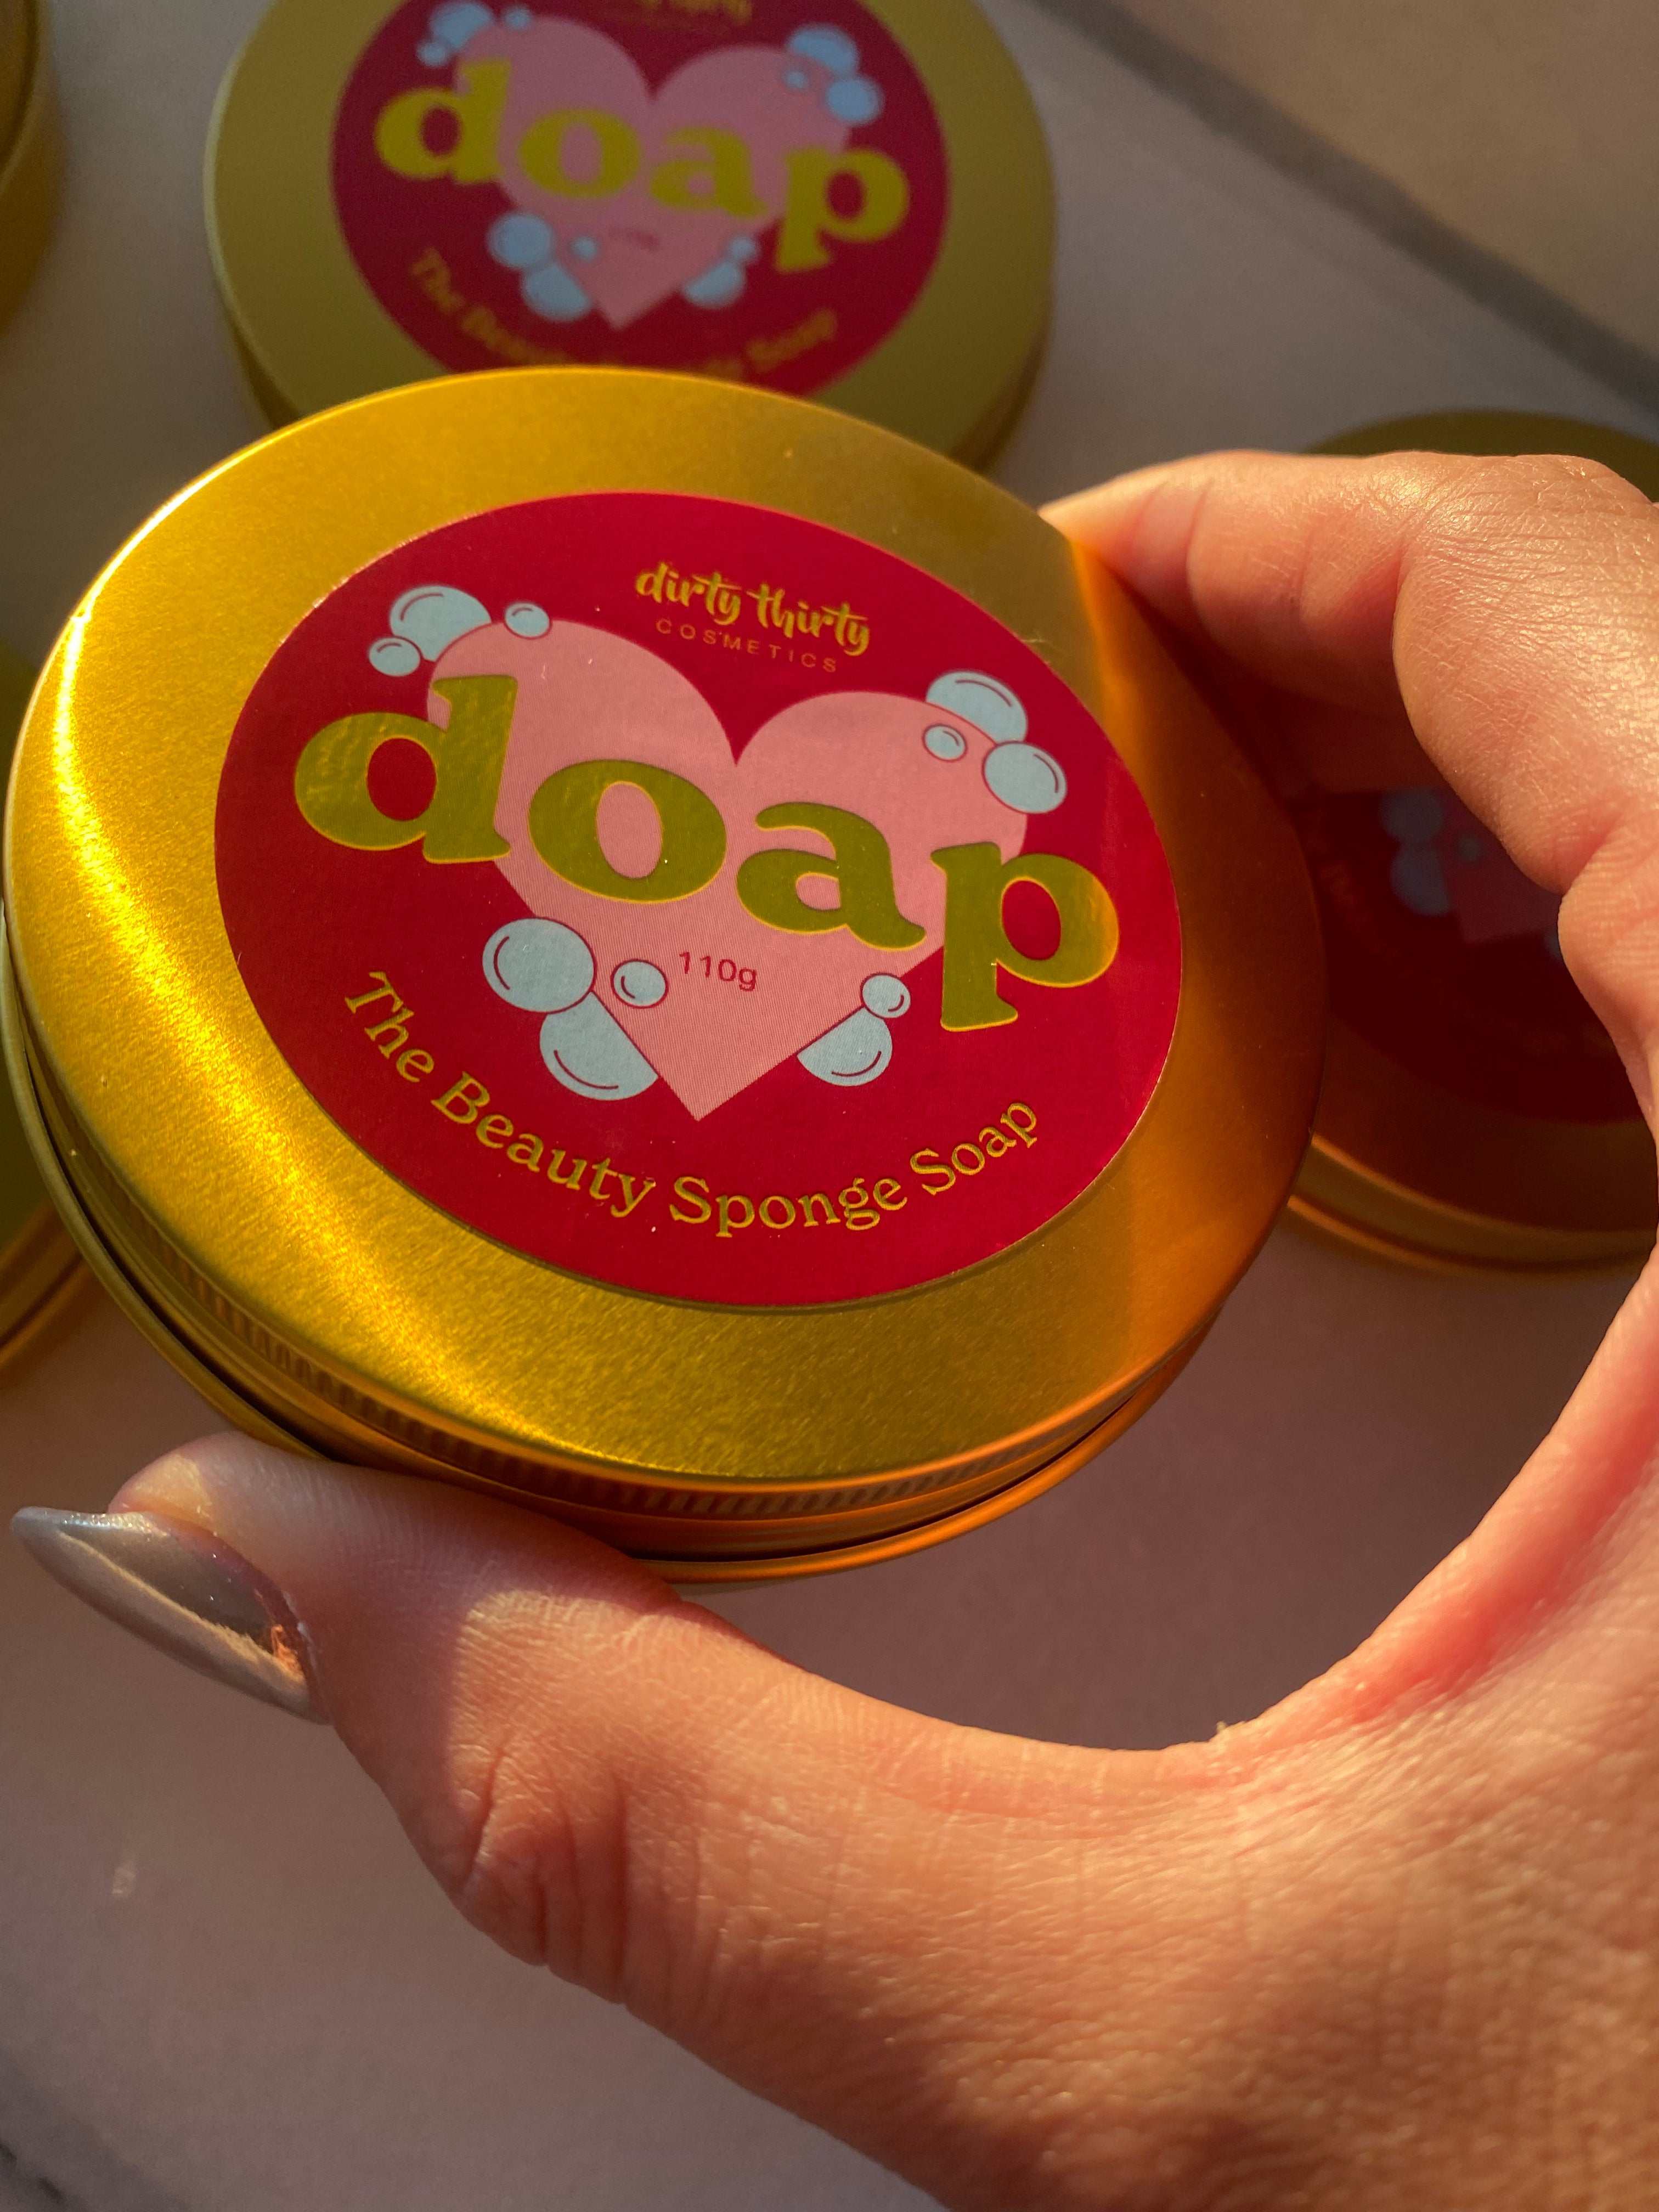 DOAP- the beauty sponge soap